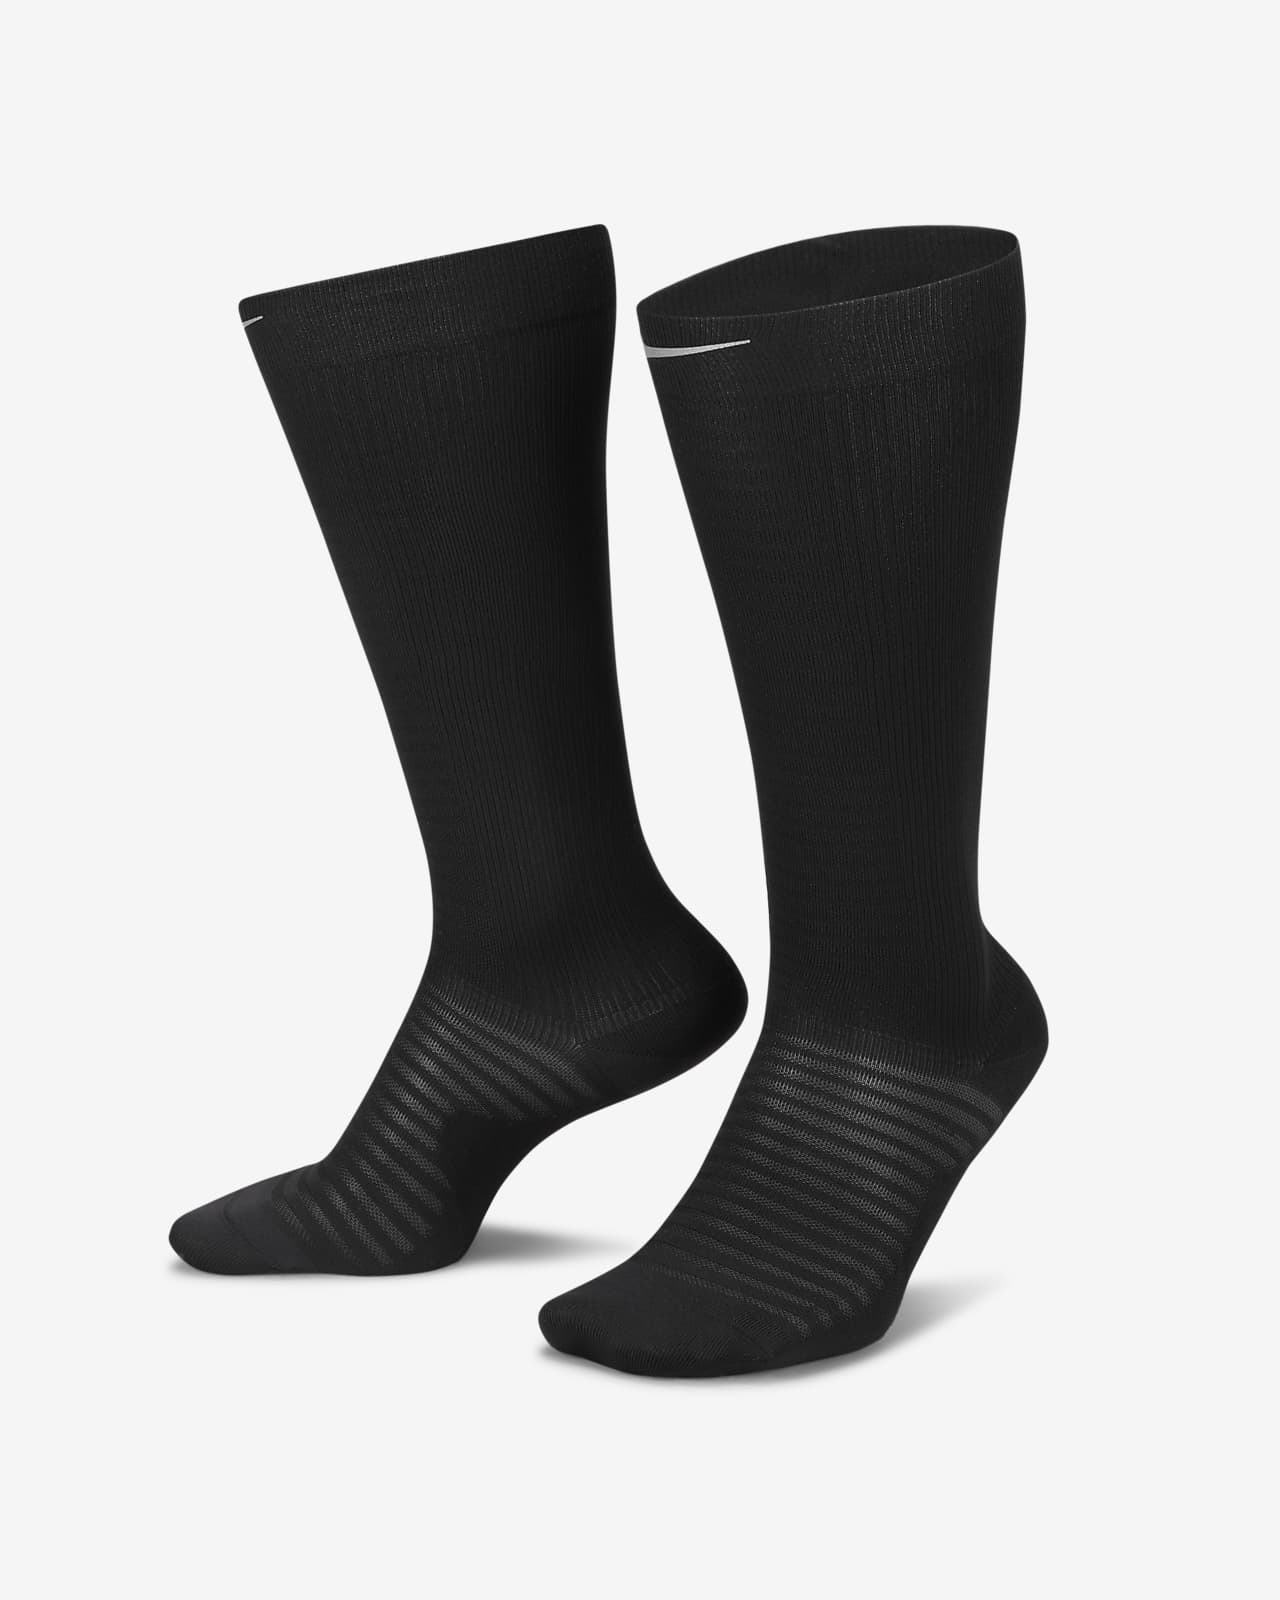 Nike Spark Lightweight Over-The-Calf Compression Running Socks